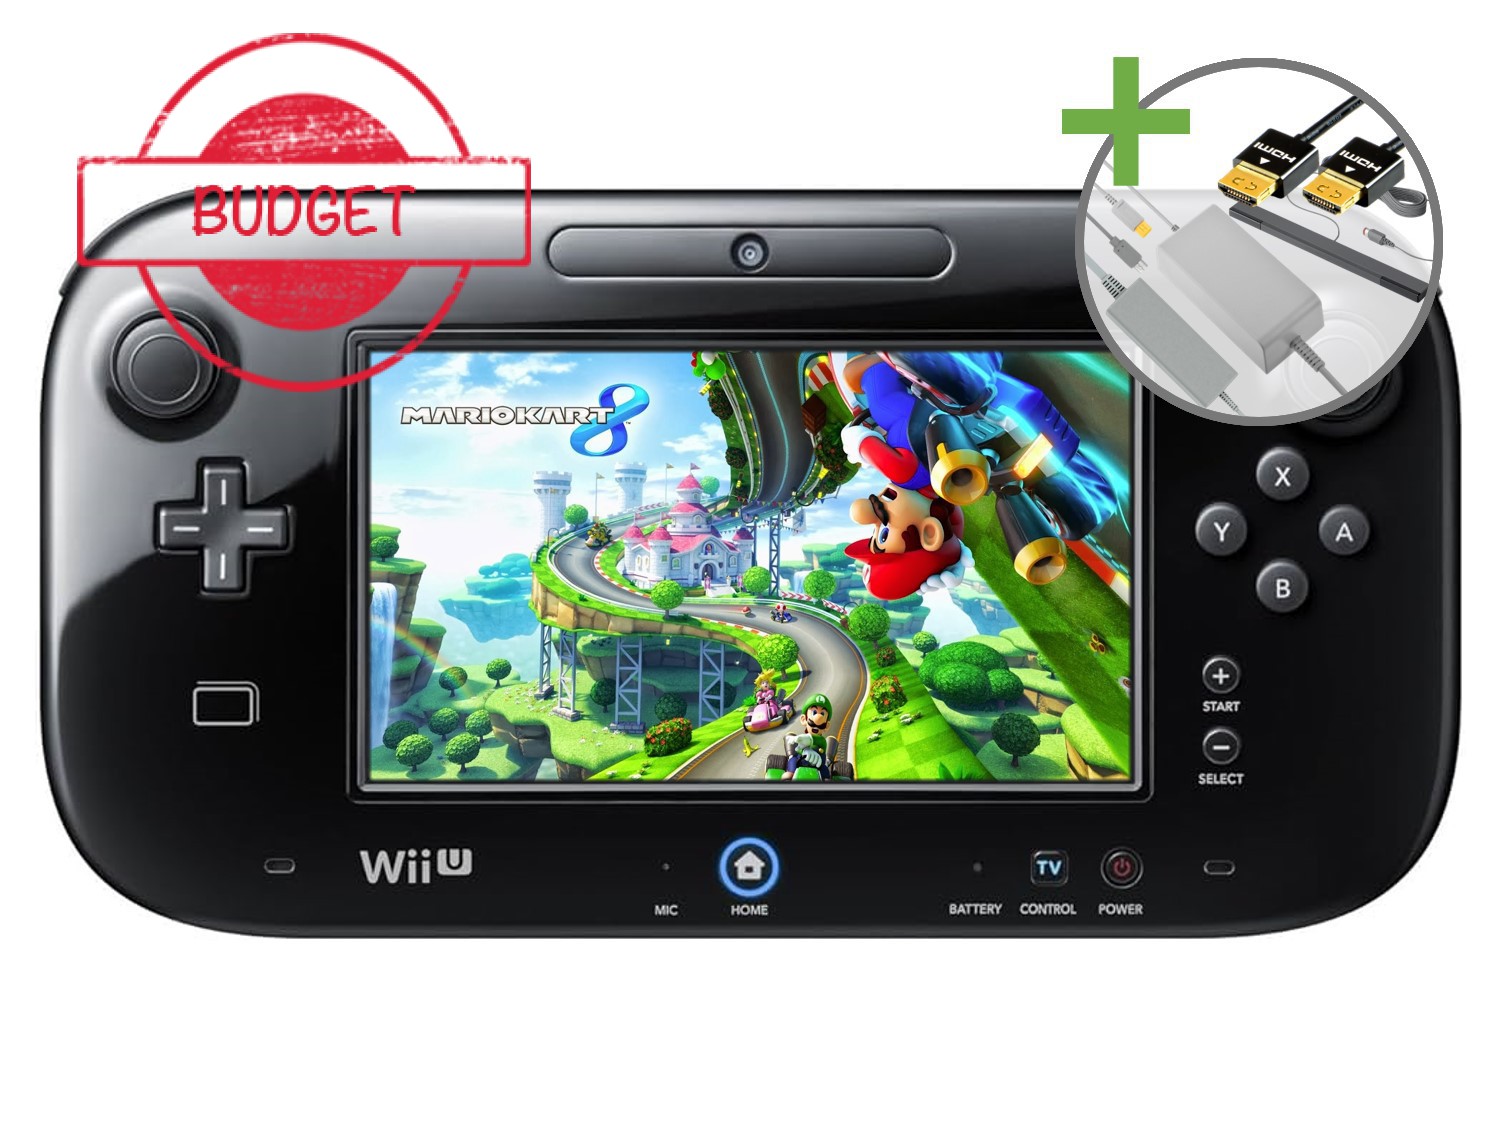 Nintendo Wii U Starter Pack - Mario Kart 8 Edition - Budget - Wii U Hardware - 2